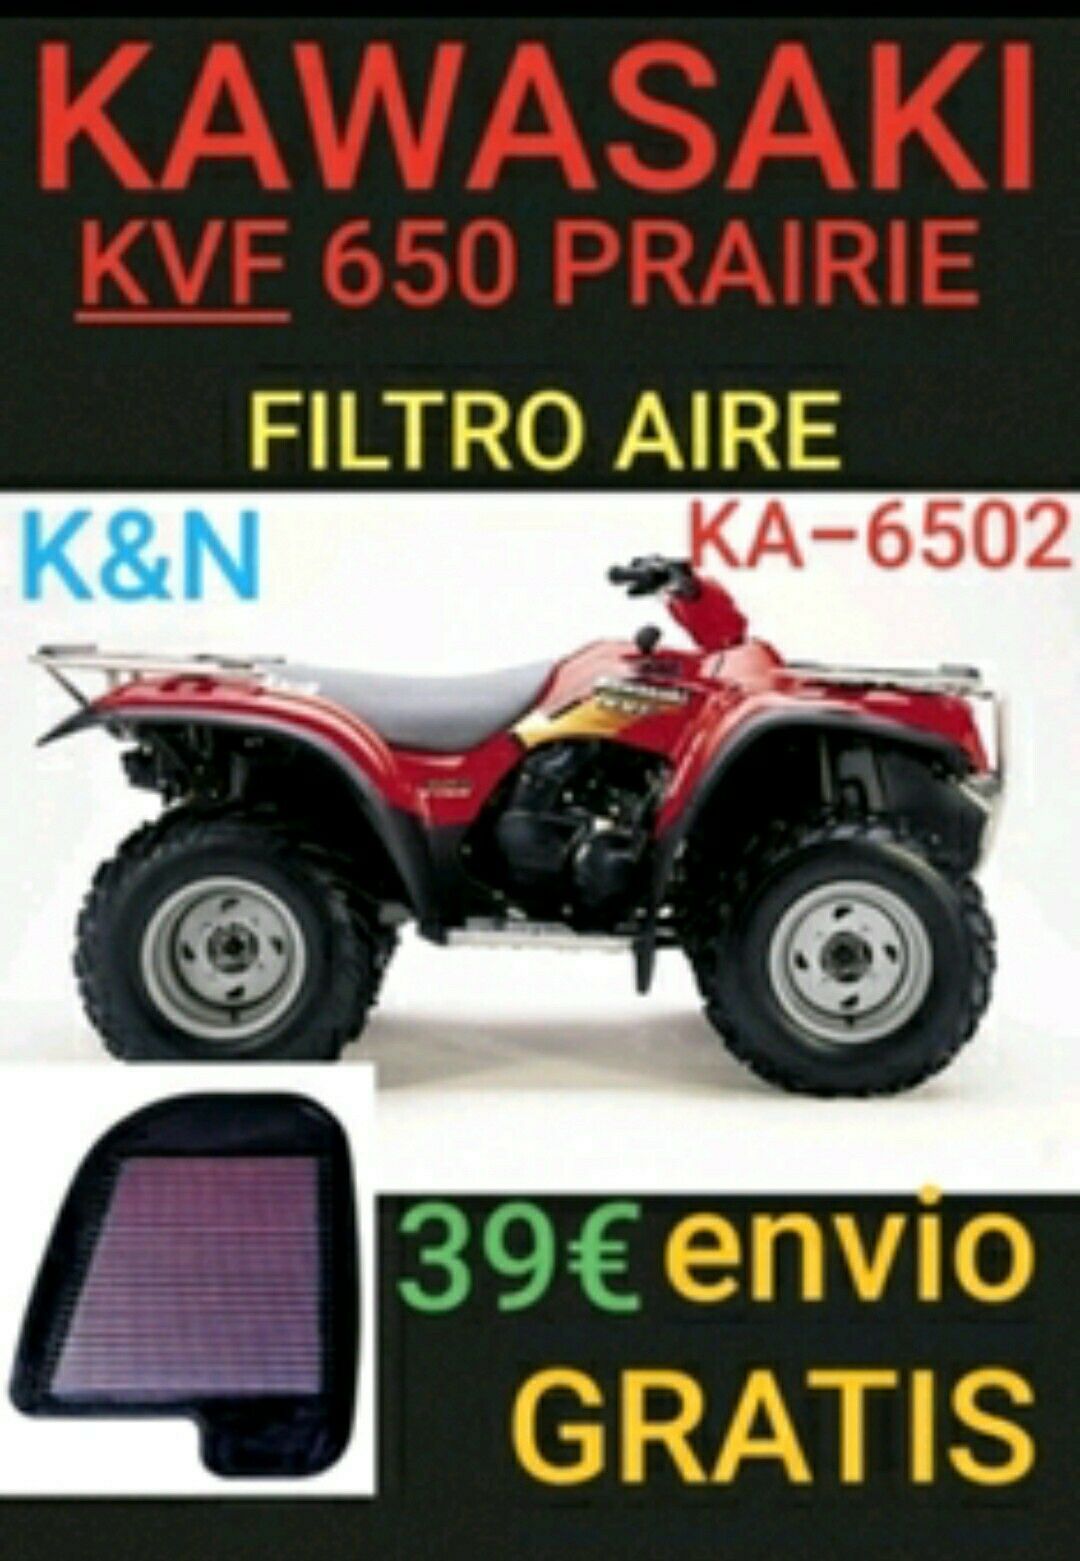 KA-6502 K&n Filtro de Aire para Kawasaki KVF650 Prairie 4x4 635